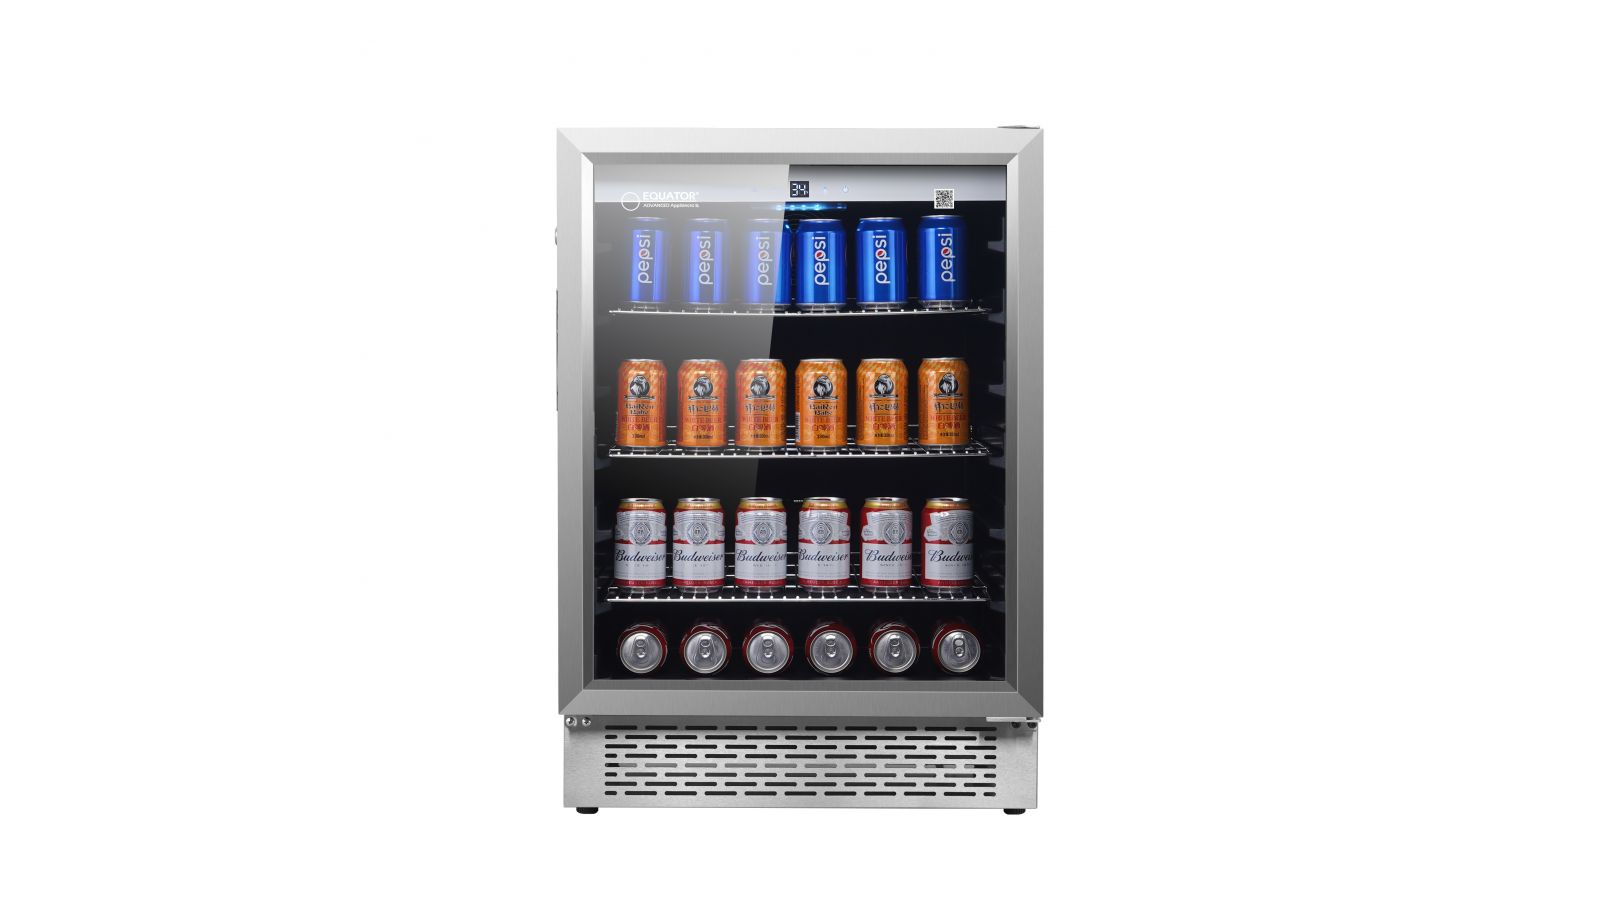 4.6cf Built-in/Freestanding Outdoor/Indoor Refrigerator with 7 Color LED Lights